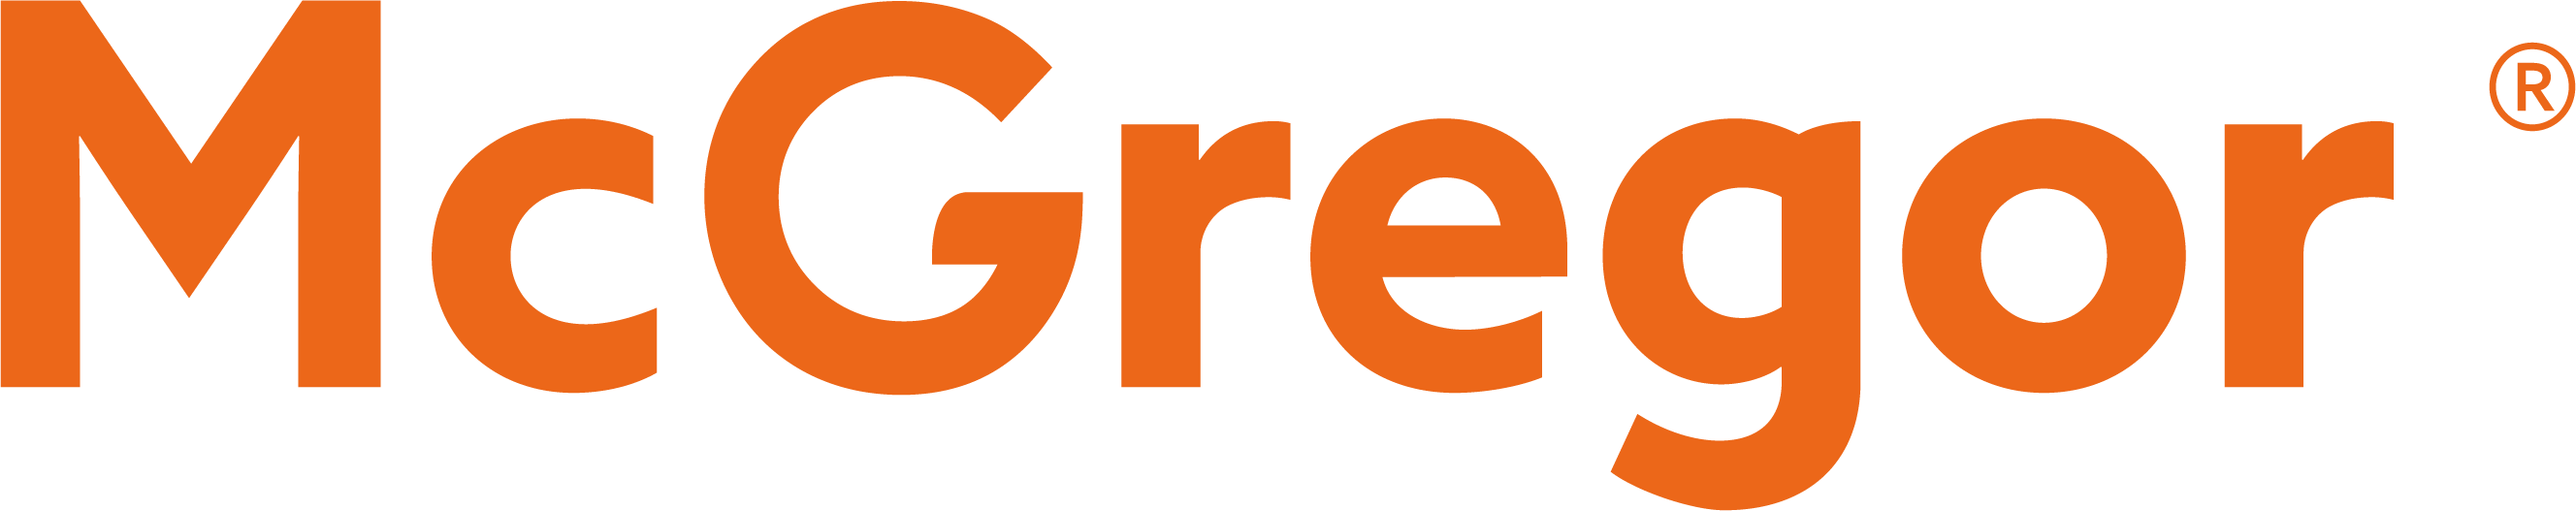 McGregor Logo Orange